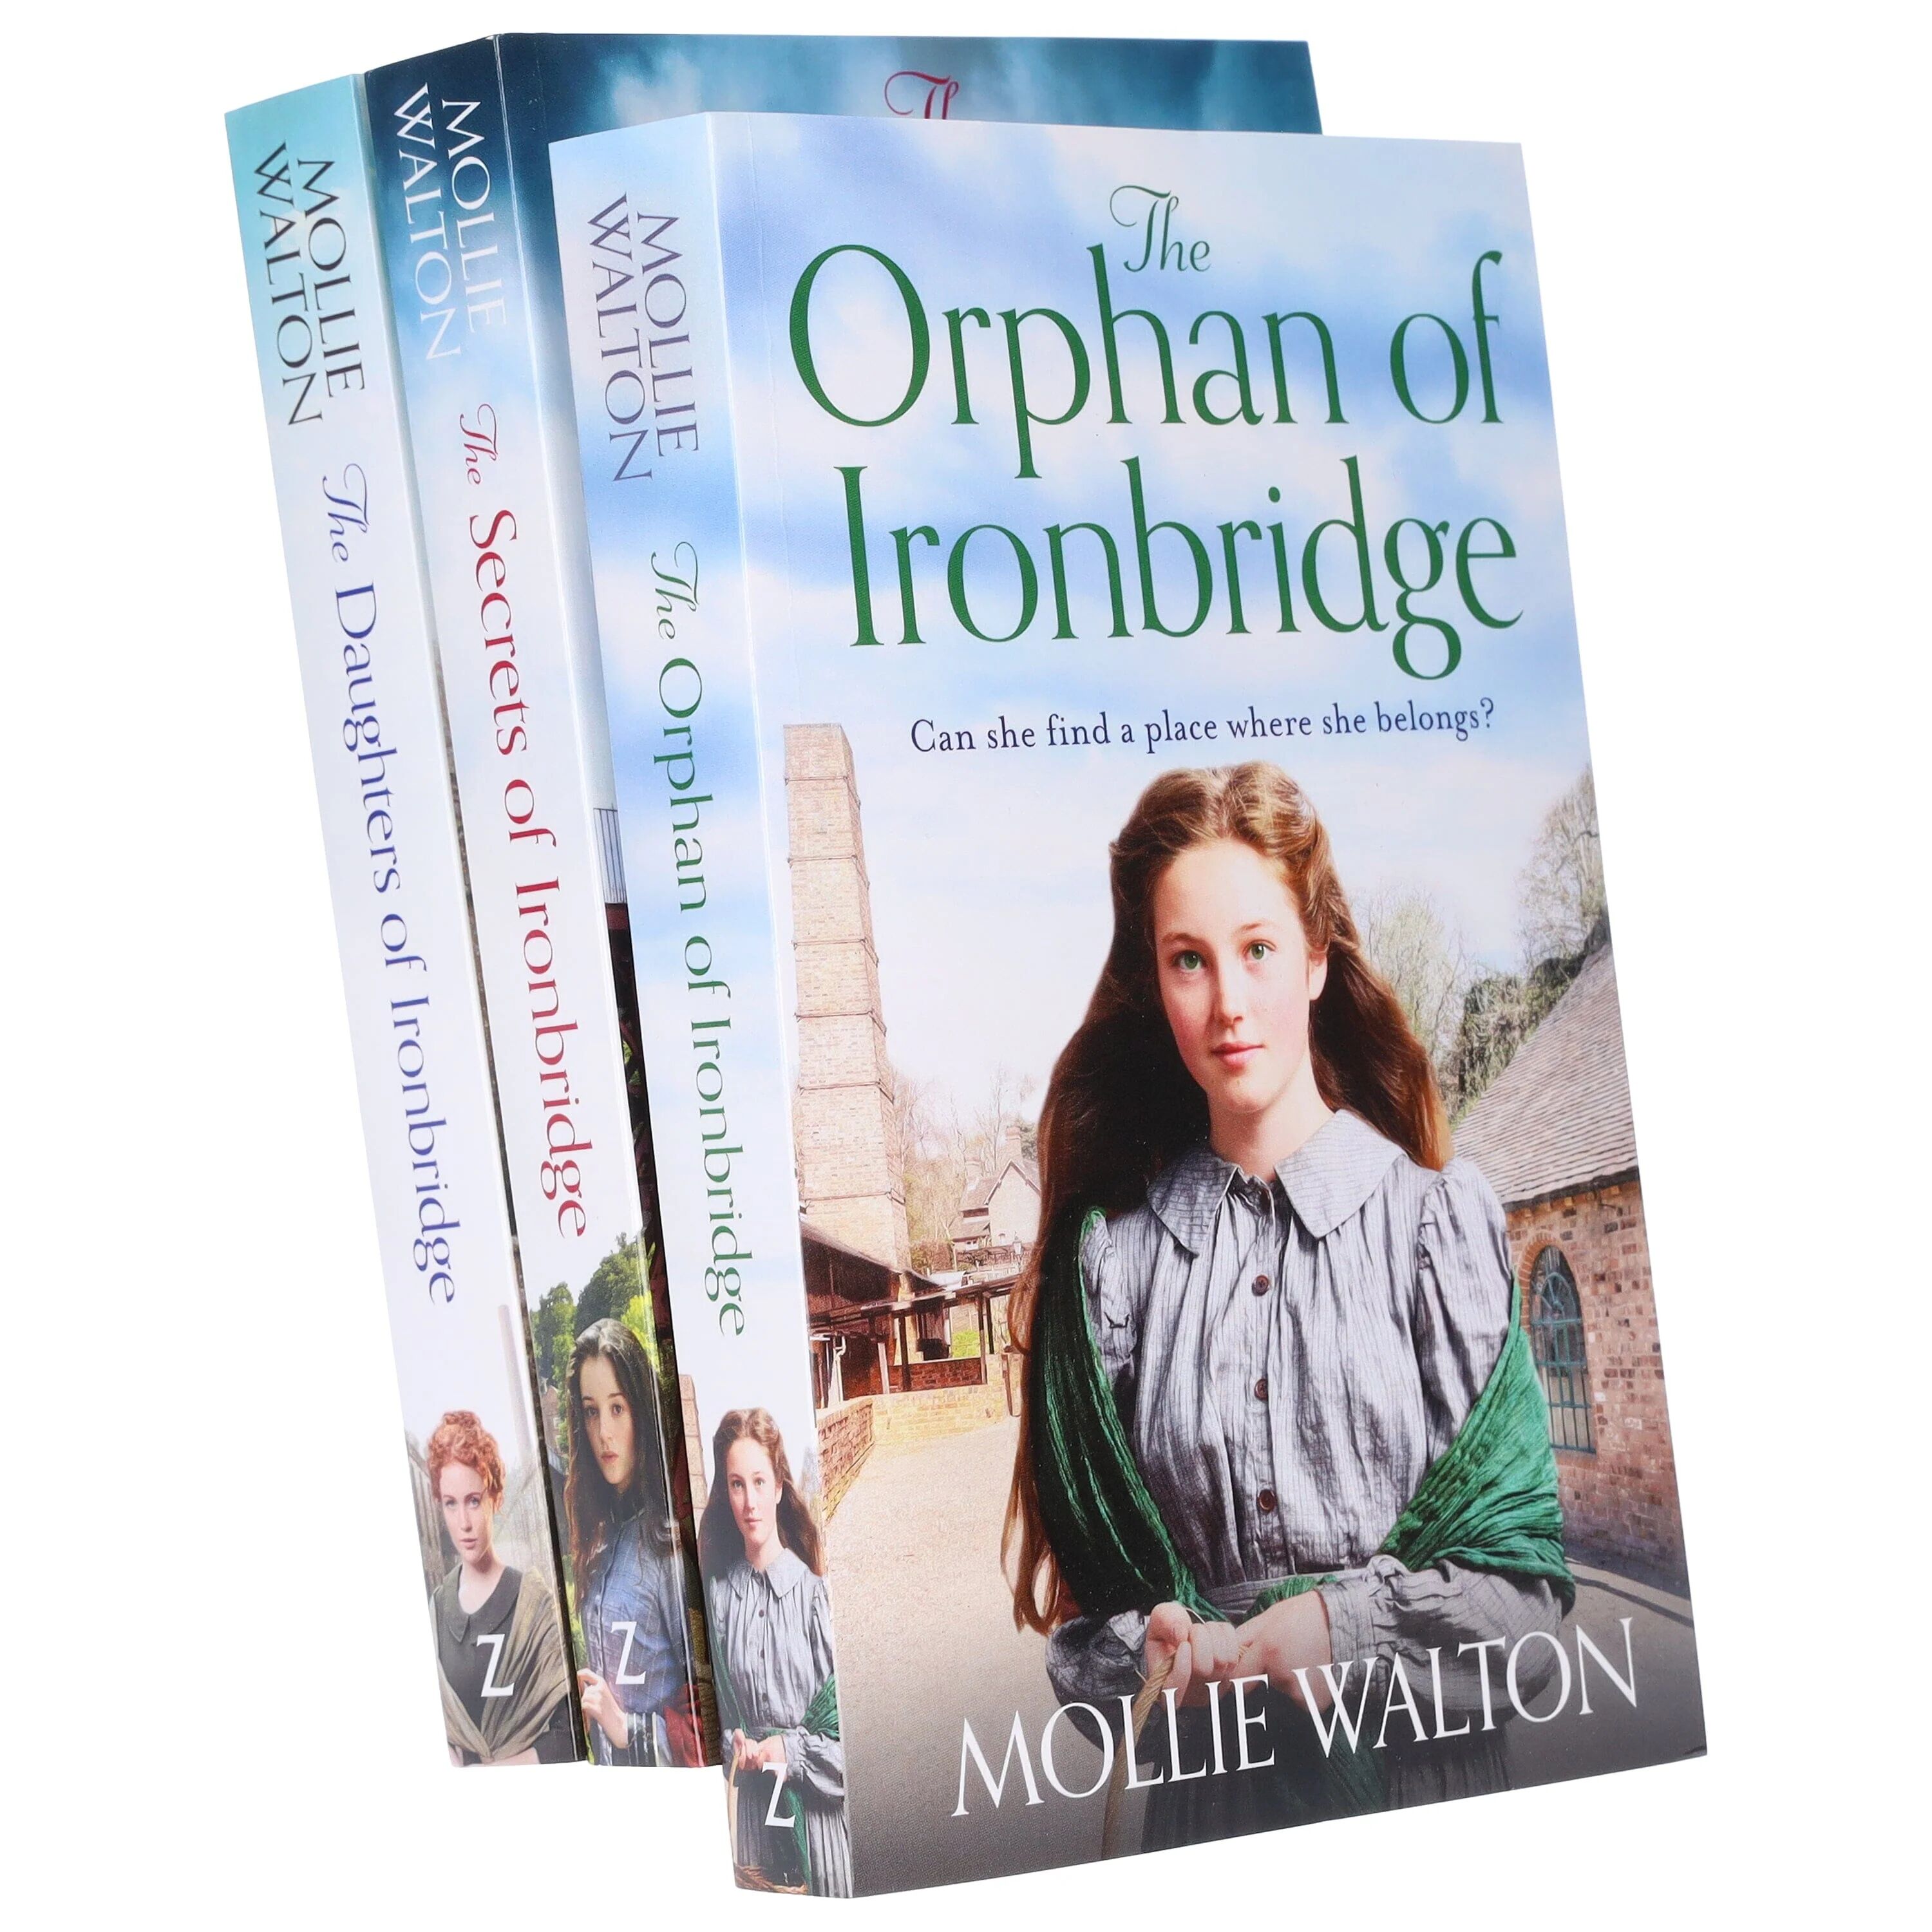 Ironbridge Trilogy 3 Books Collection Set by Mollie Walton - Fiction - Paperback Zaffre